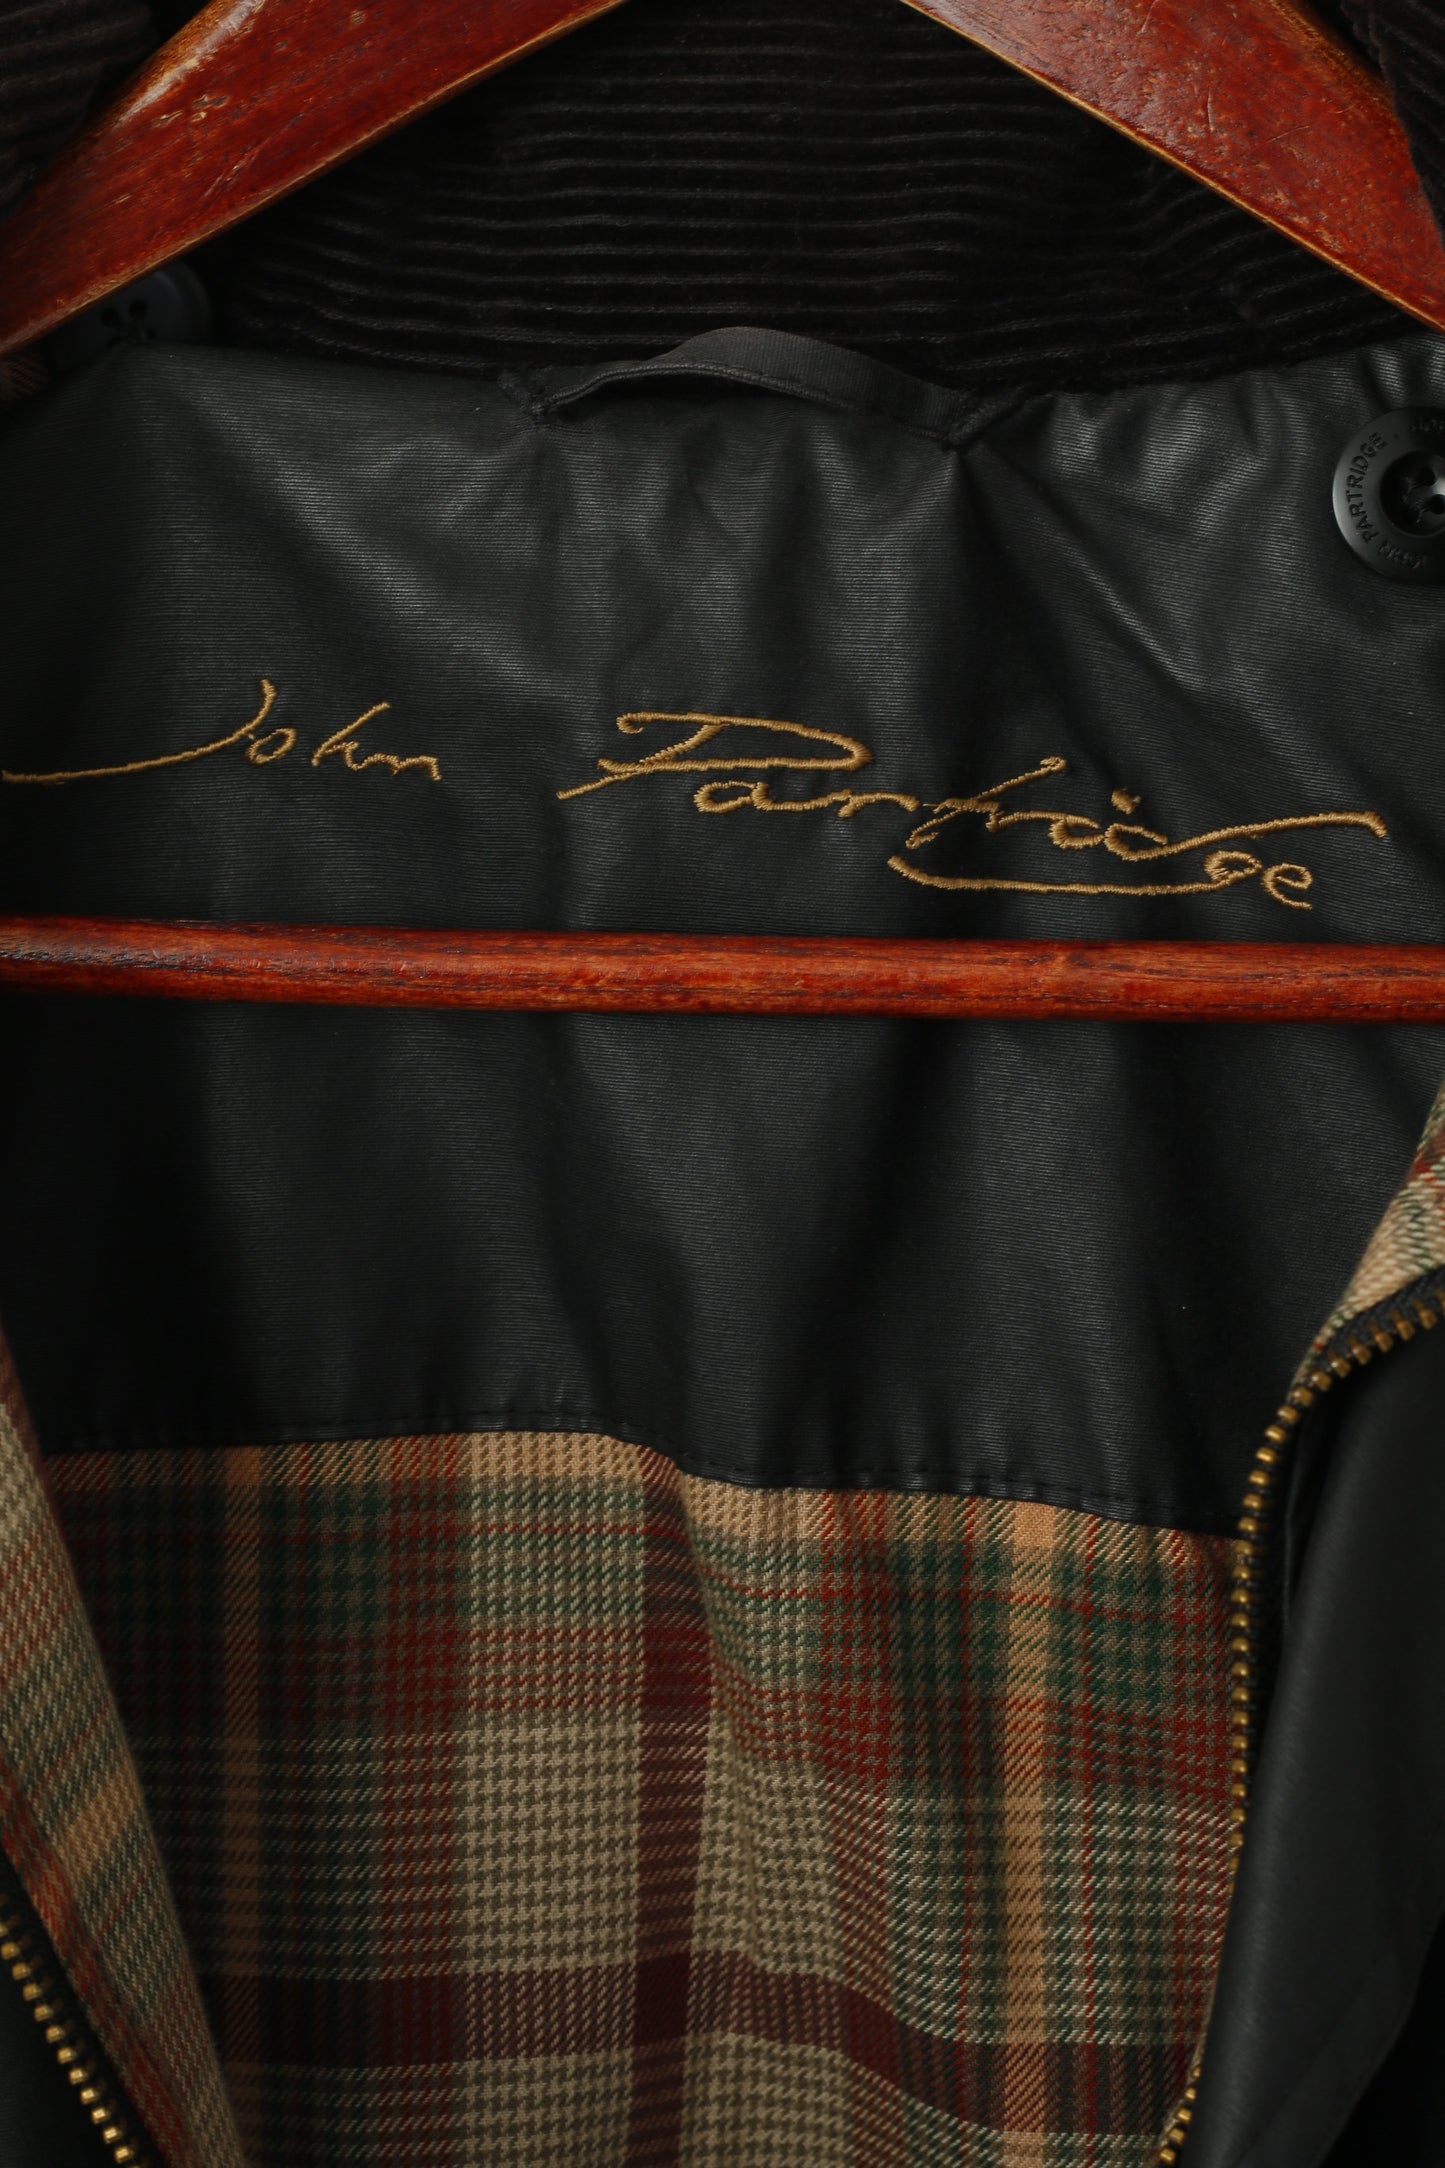 John Partridge Homme XS (S) Veste Noir Wax Coton Nylon Harrington Country Hand Made Top